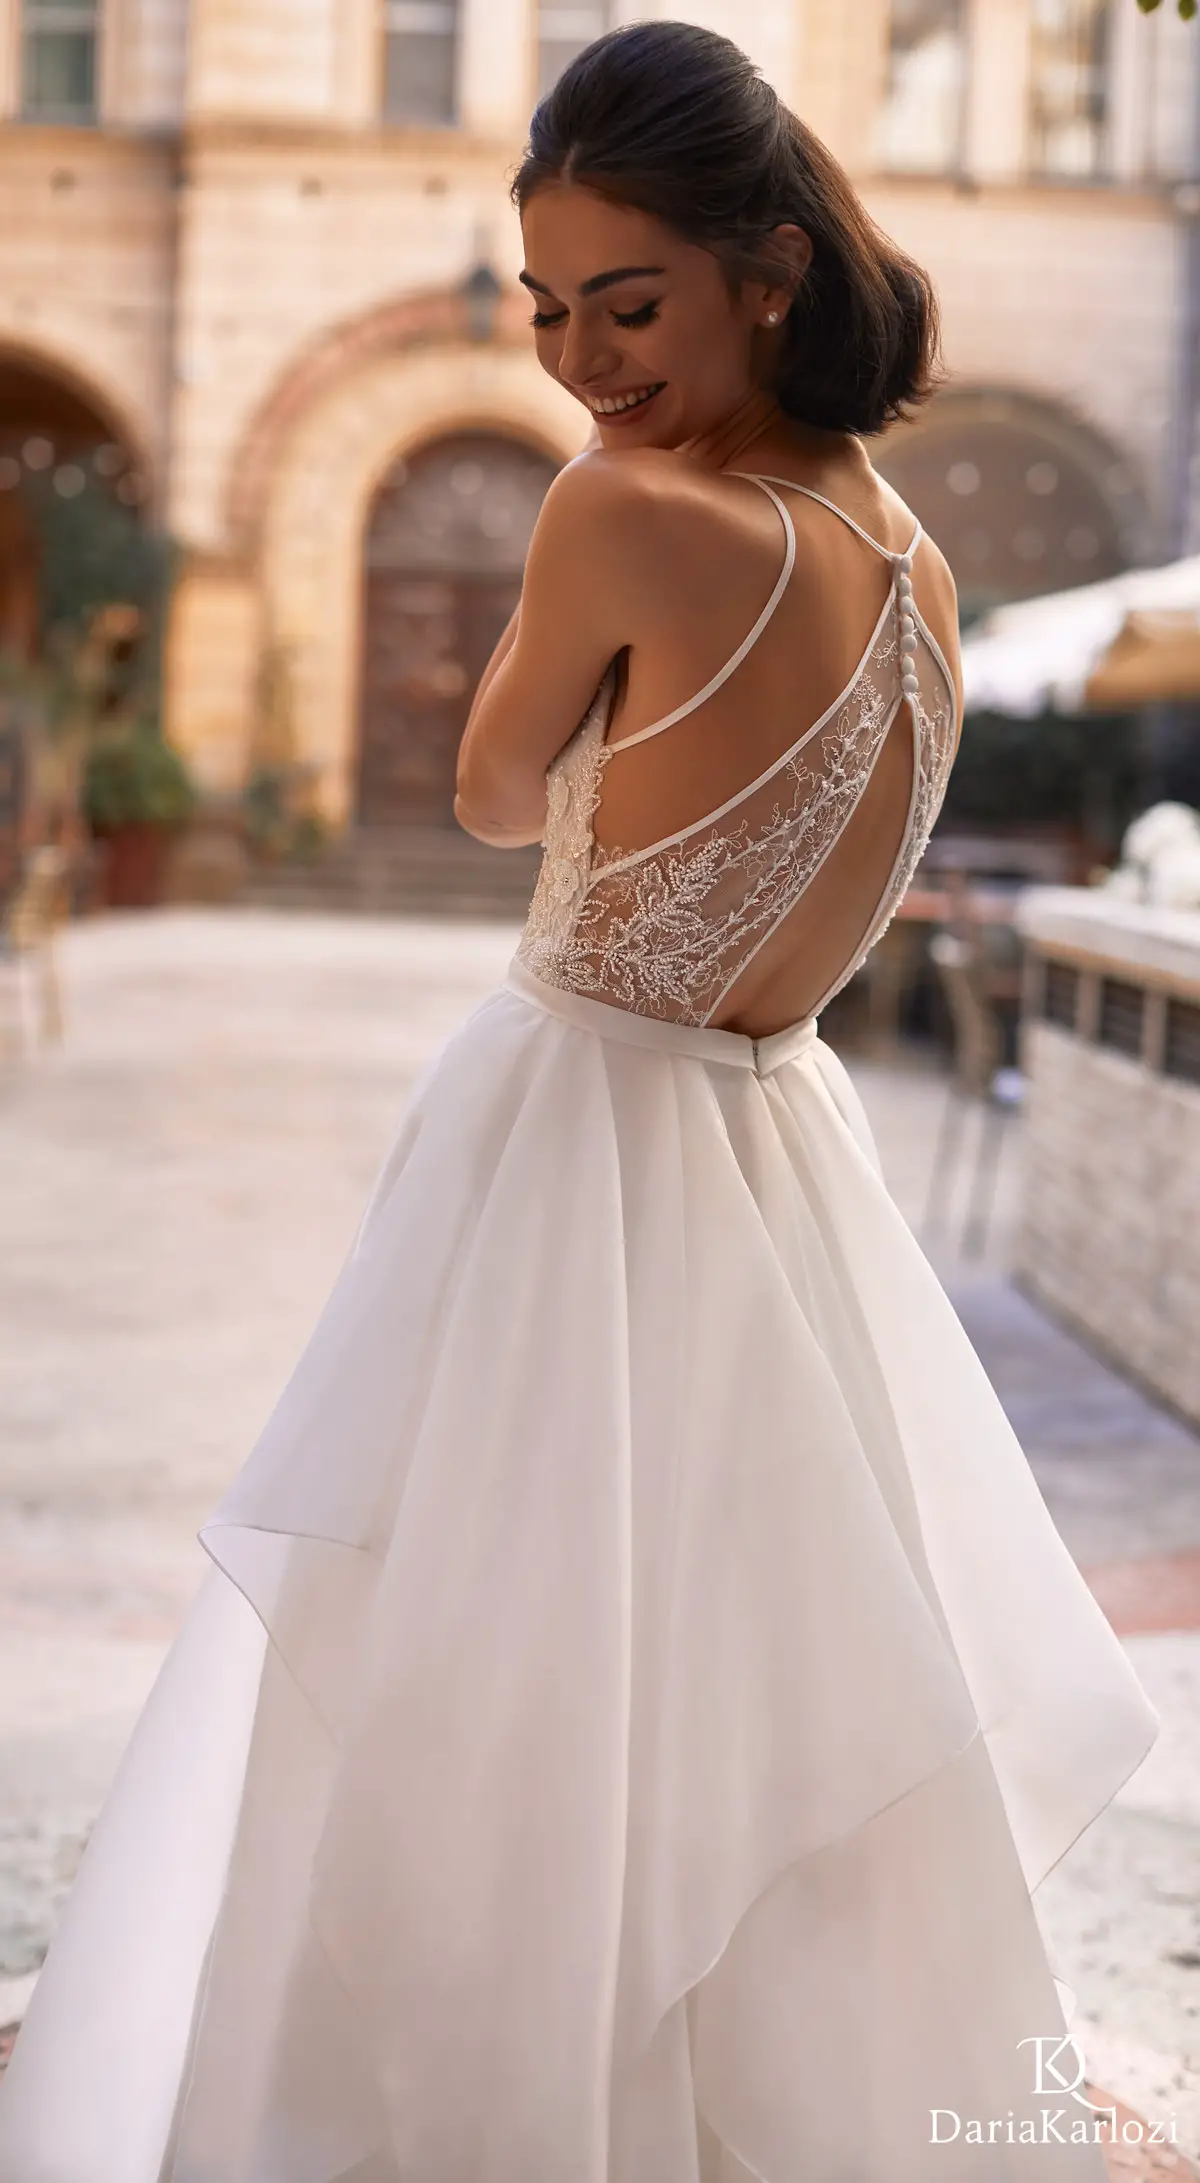 Daria Karlozi Wedding Dresses 2021 -08161- Brilliance